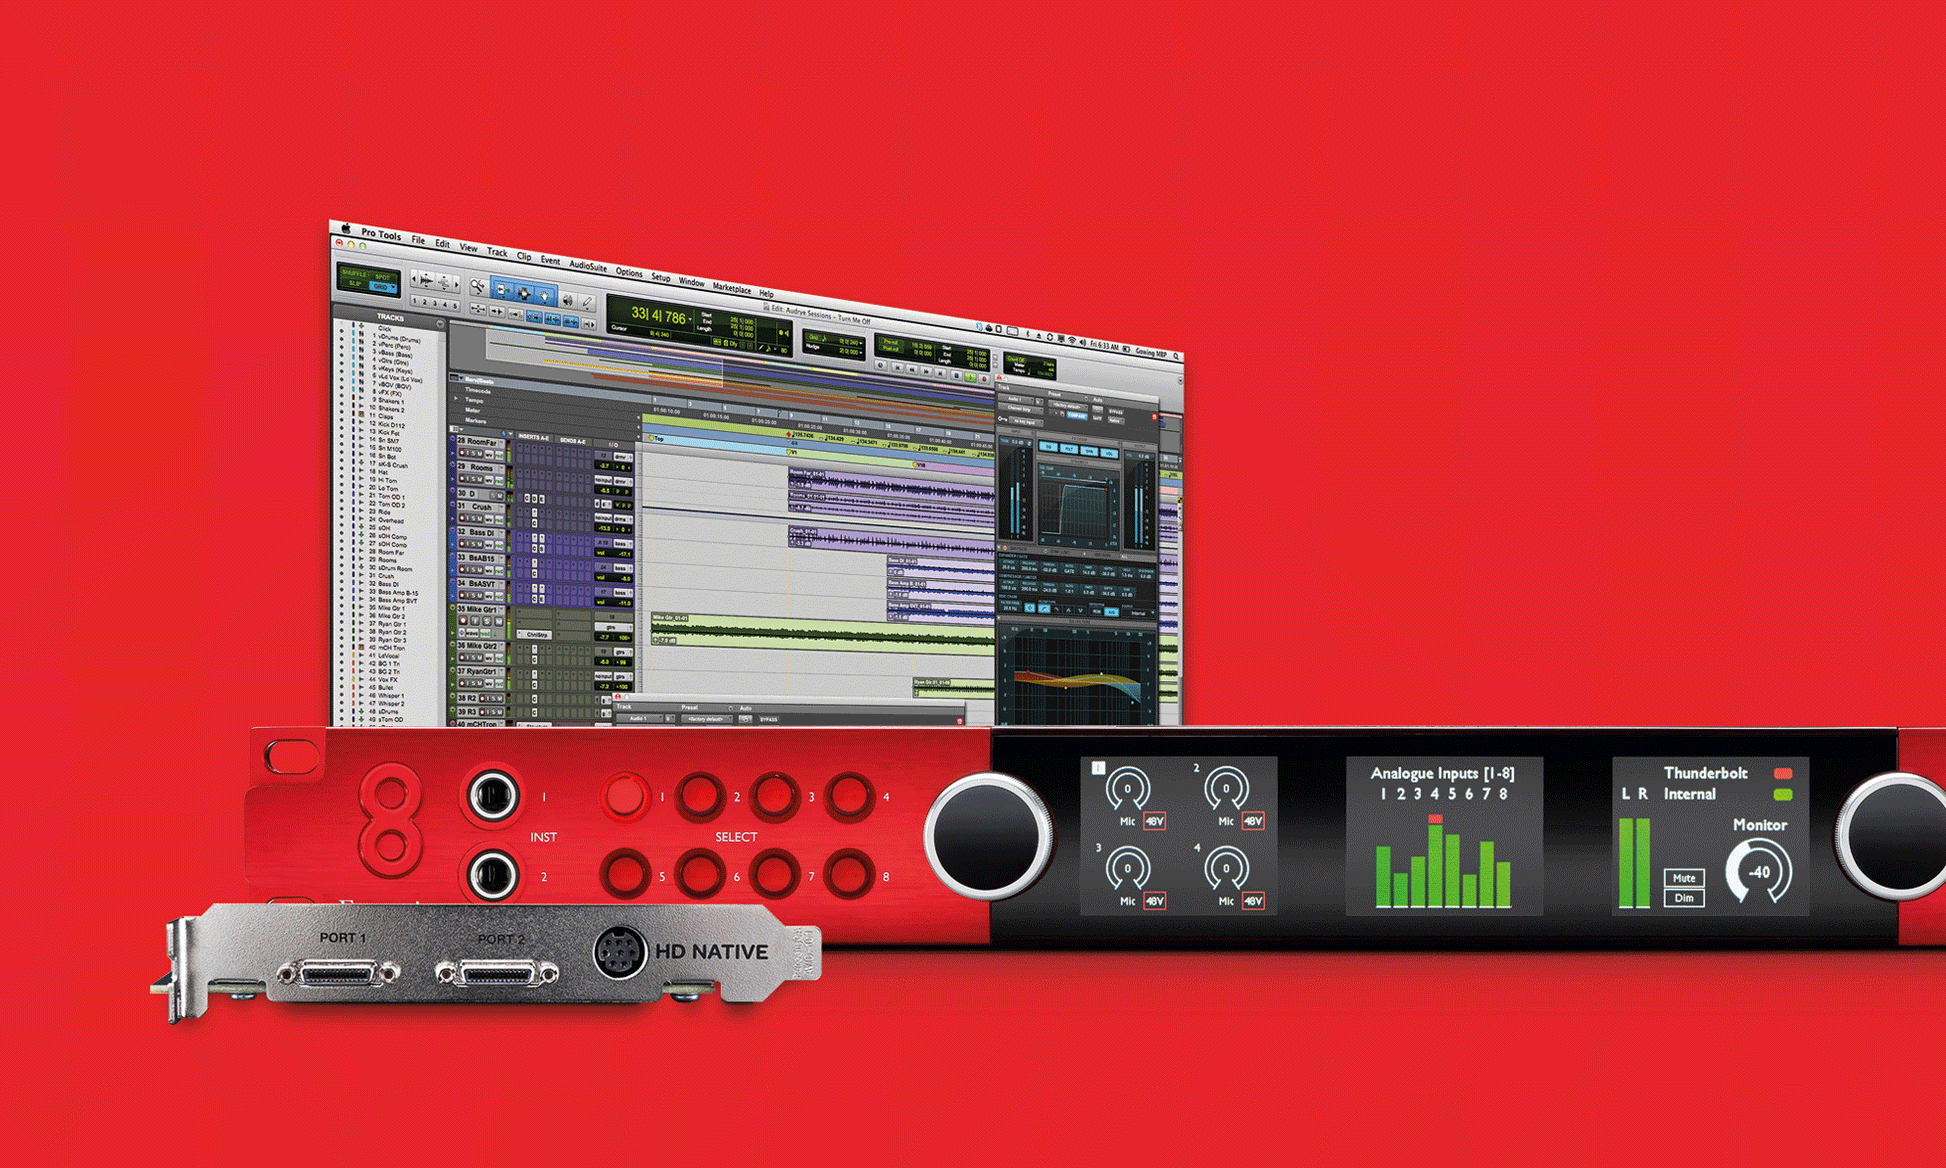 Focusrite RED 8Pre Thunderbolt™ 2, Pro Tools|HD ja Dante™ Interface - Aron Soitin